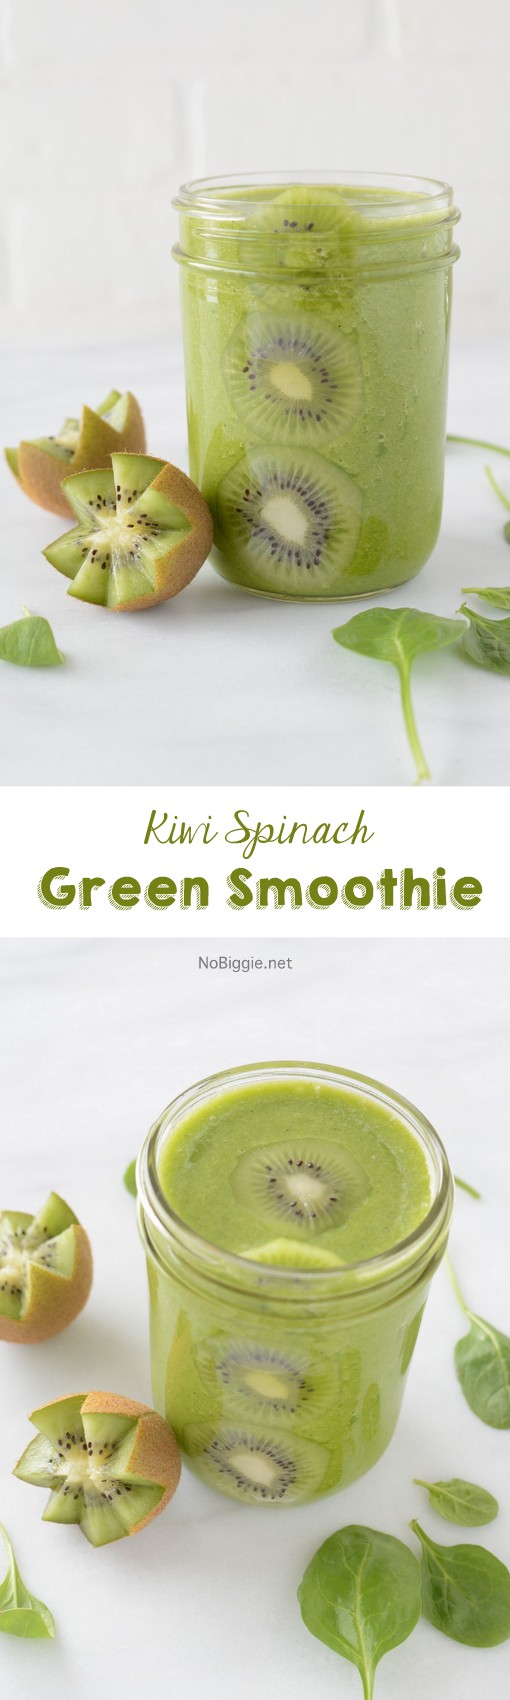 kiwi spinach smoothie | NoBiggie.net